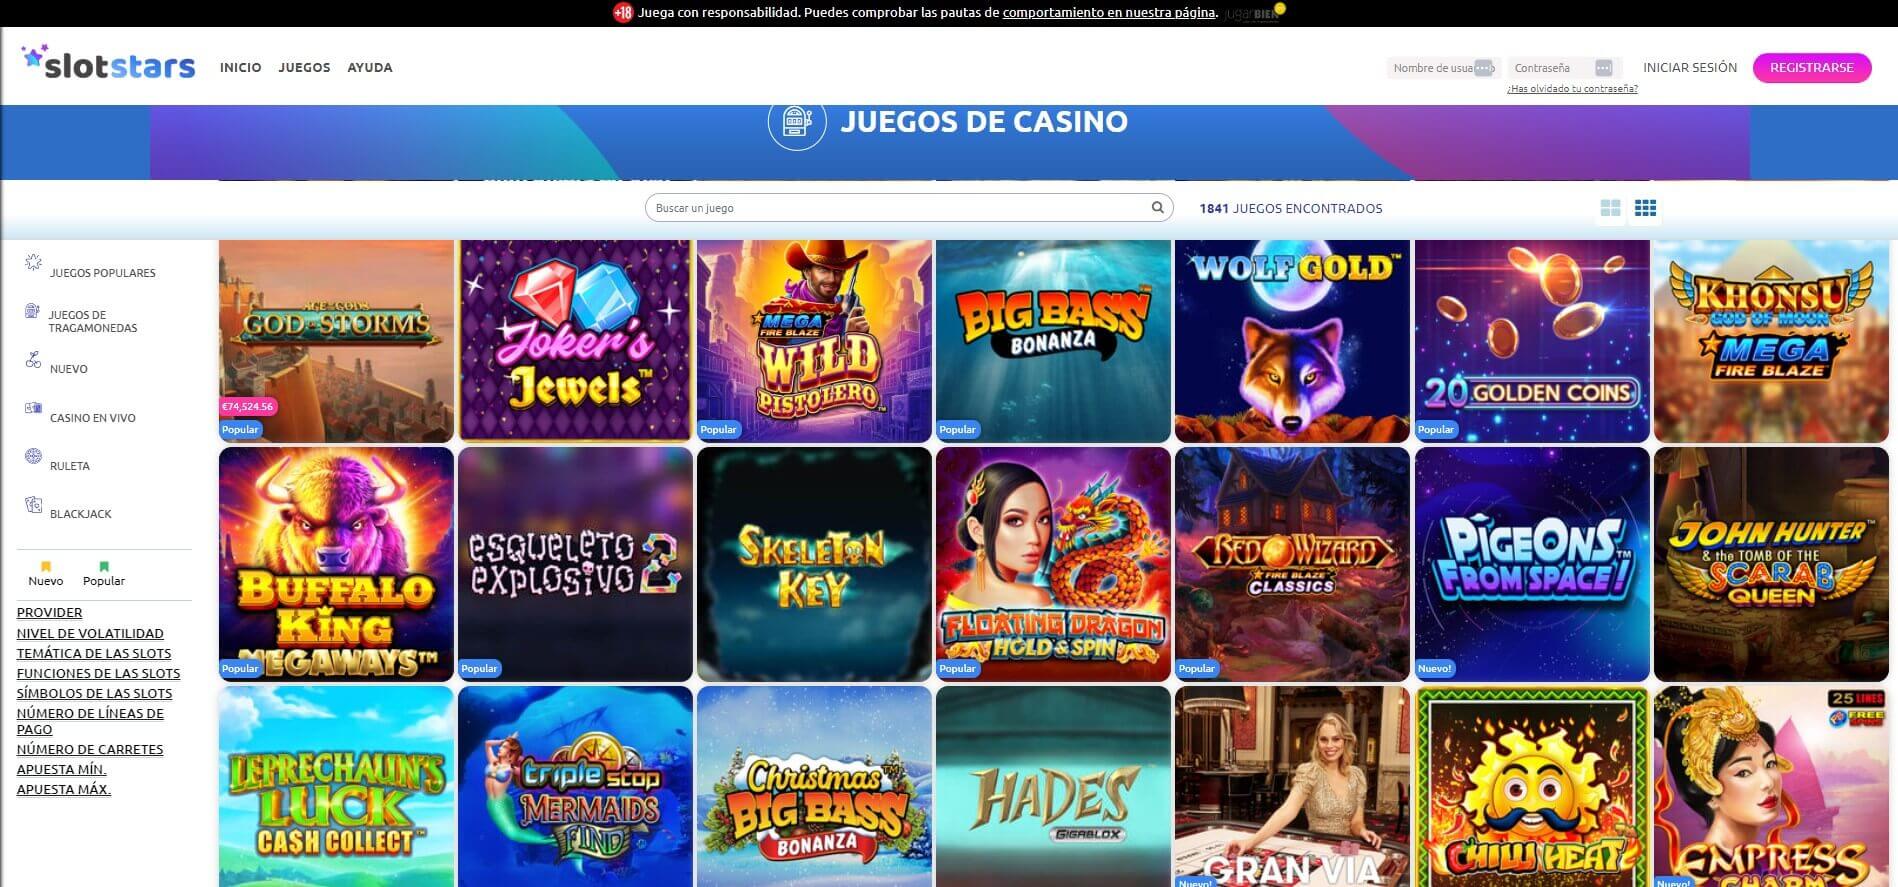 slotstars casino online en espana